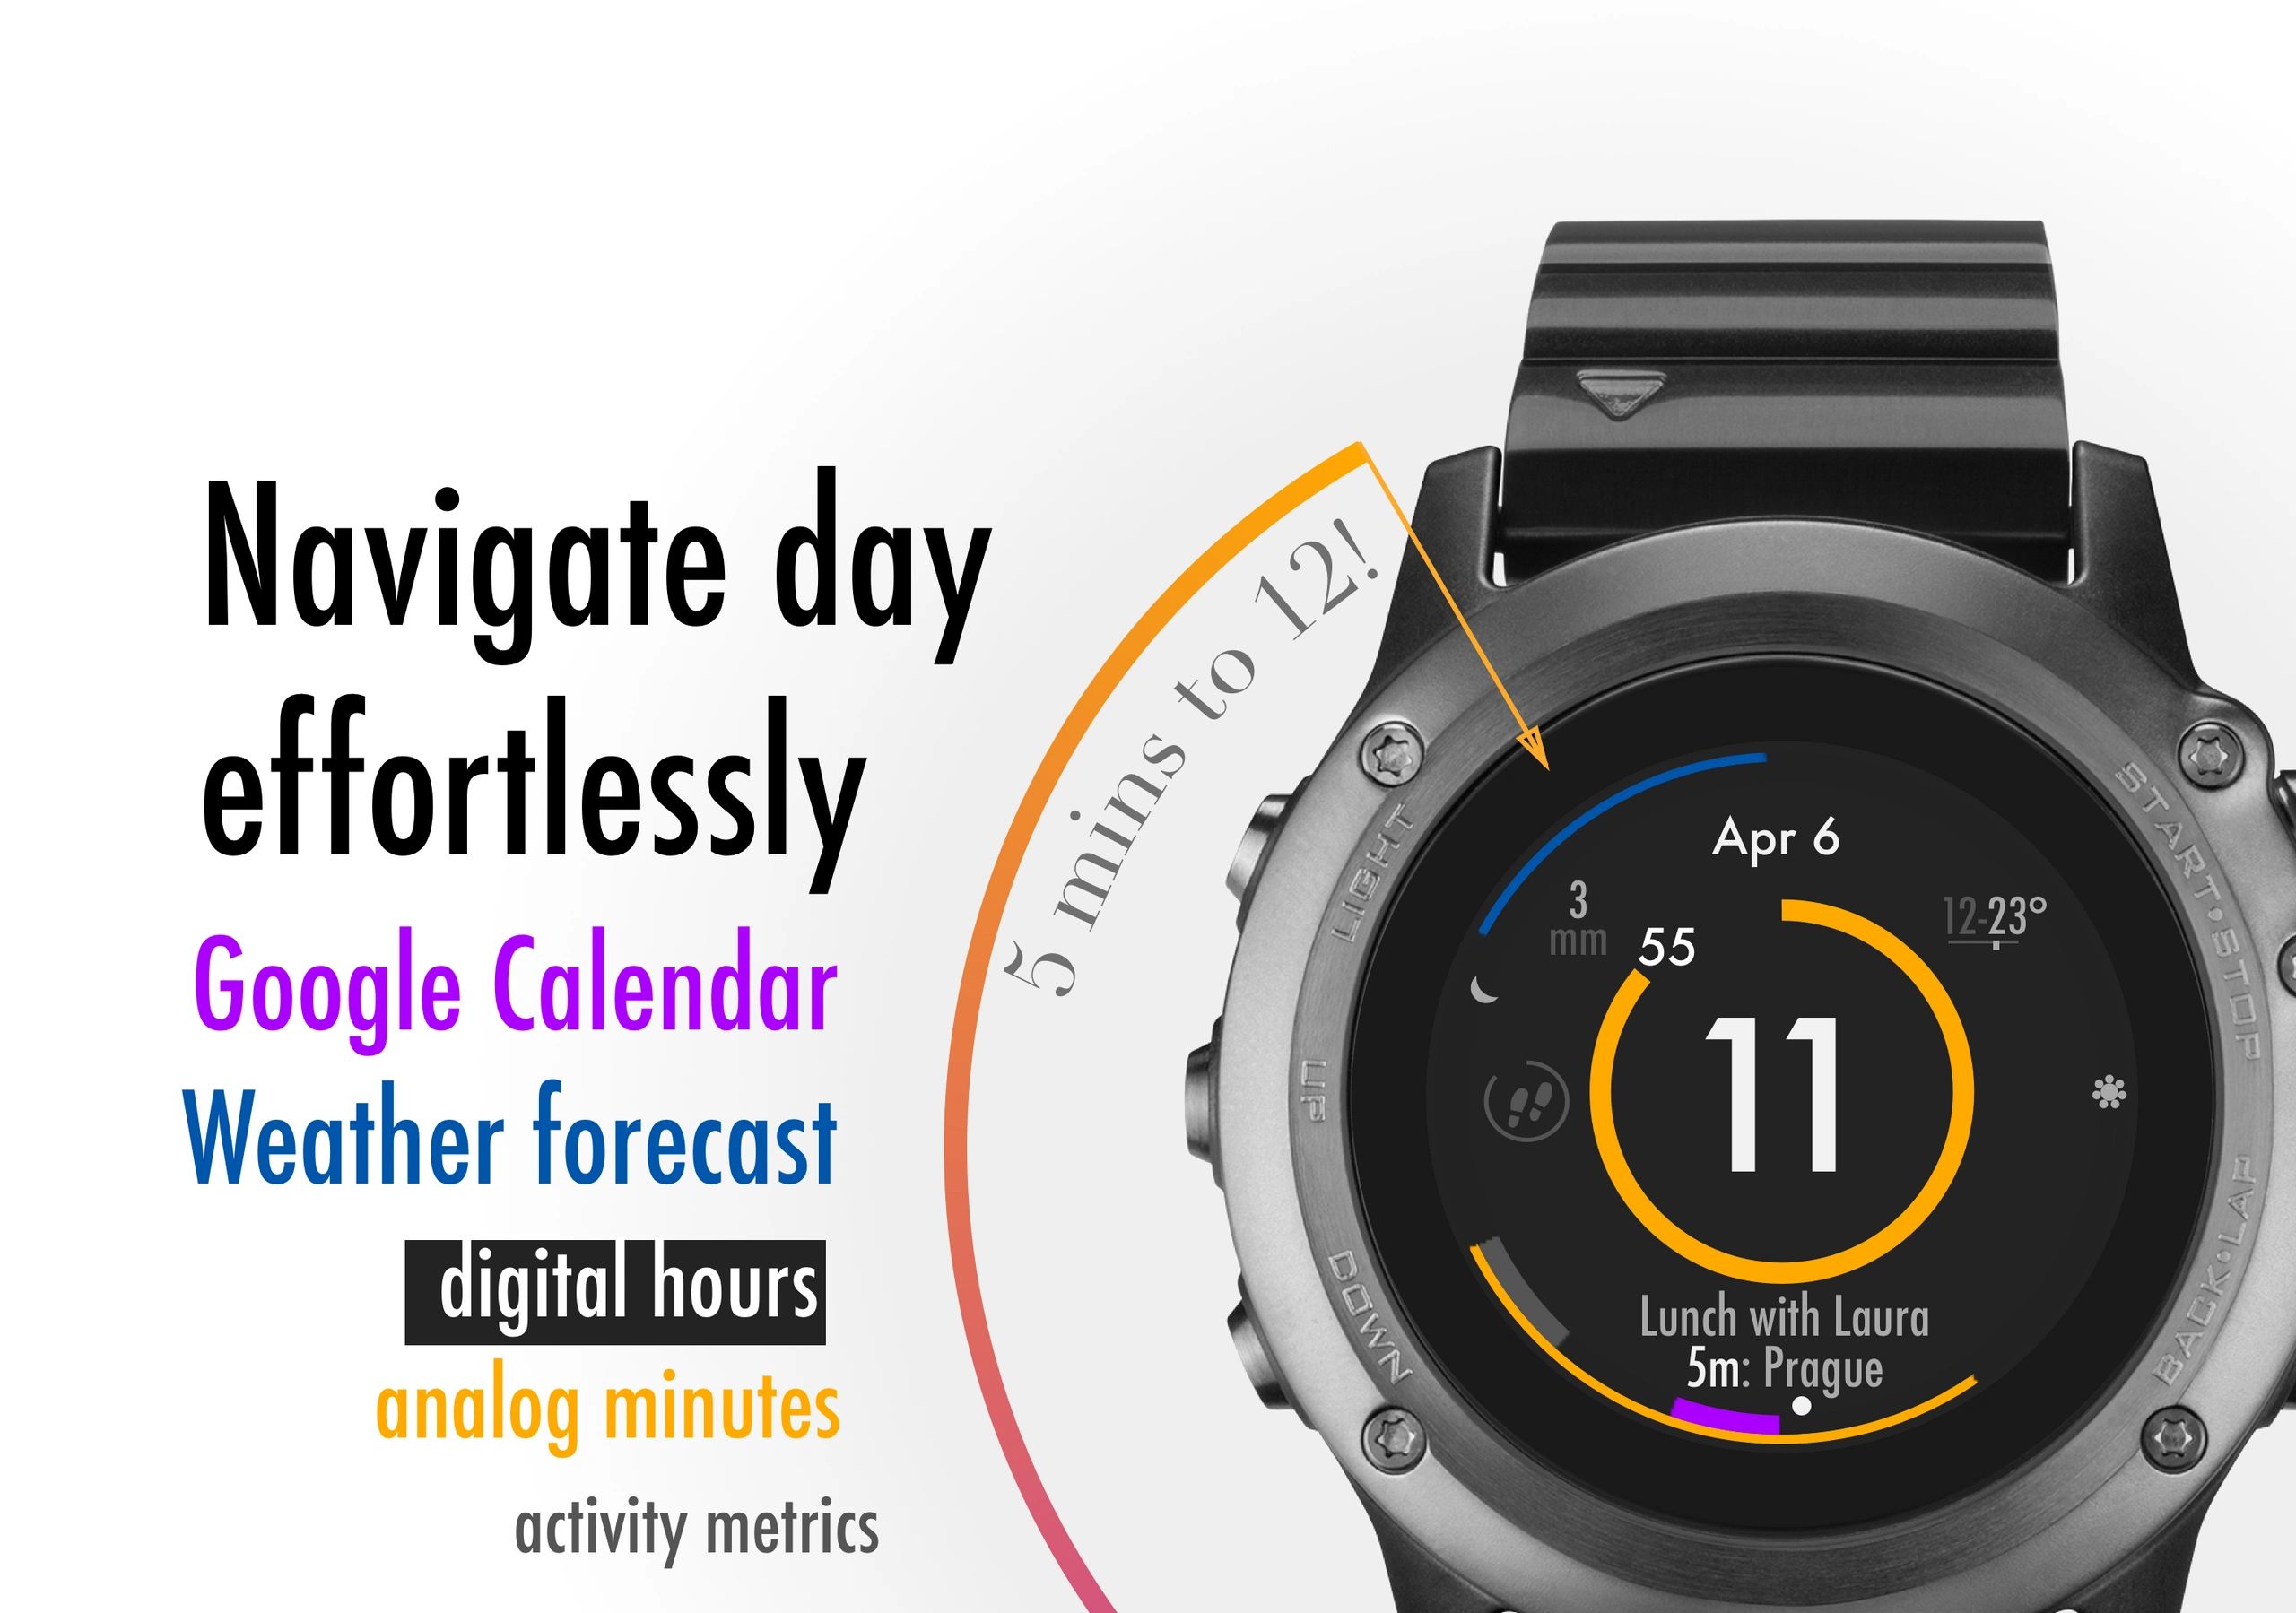 simply late! Garmin smart watch face app with Google Calendar & Weather